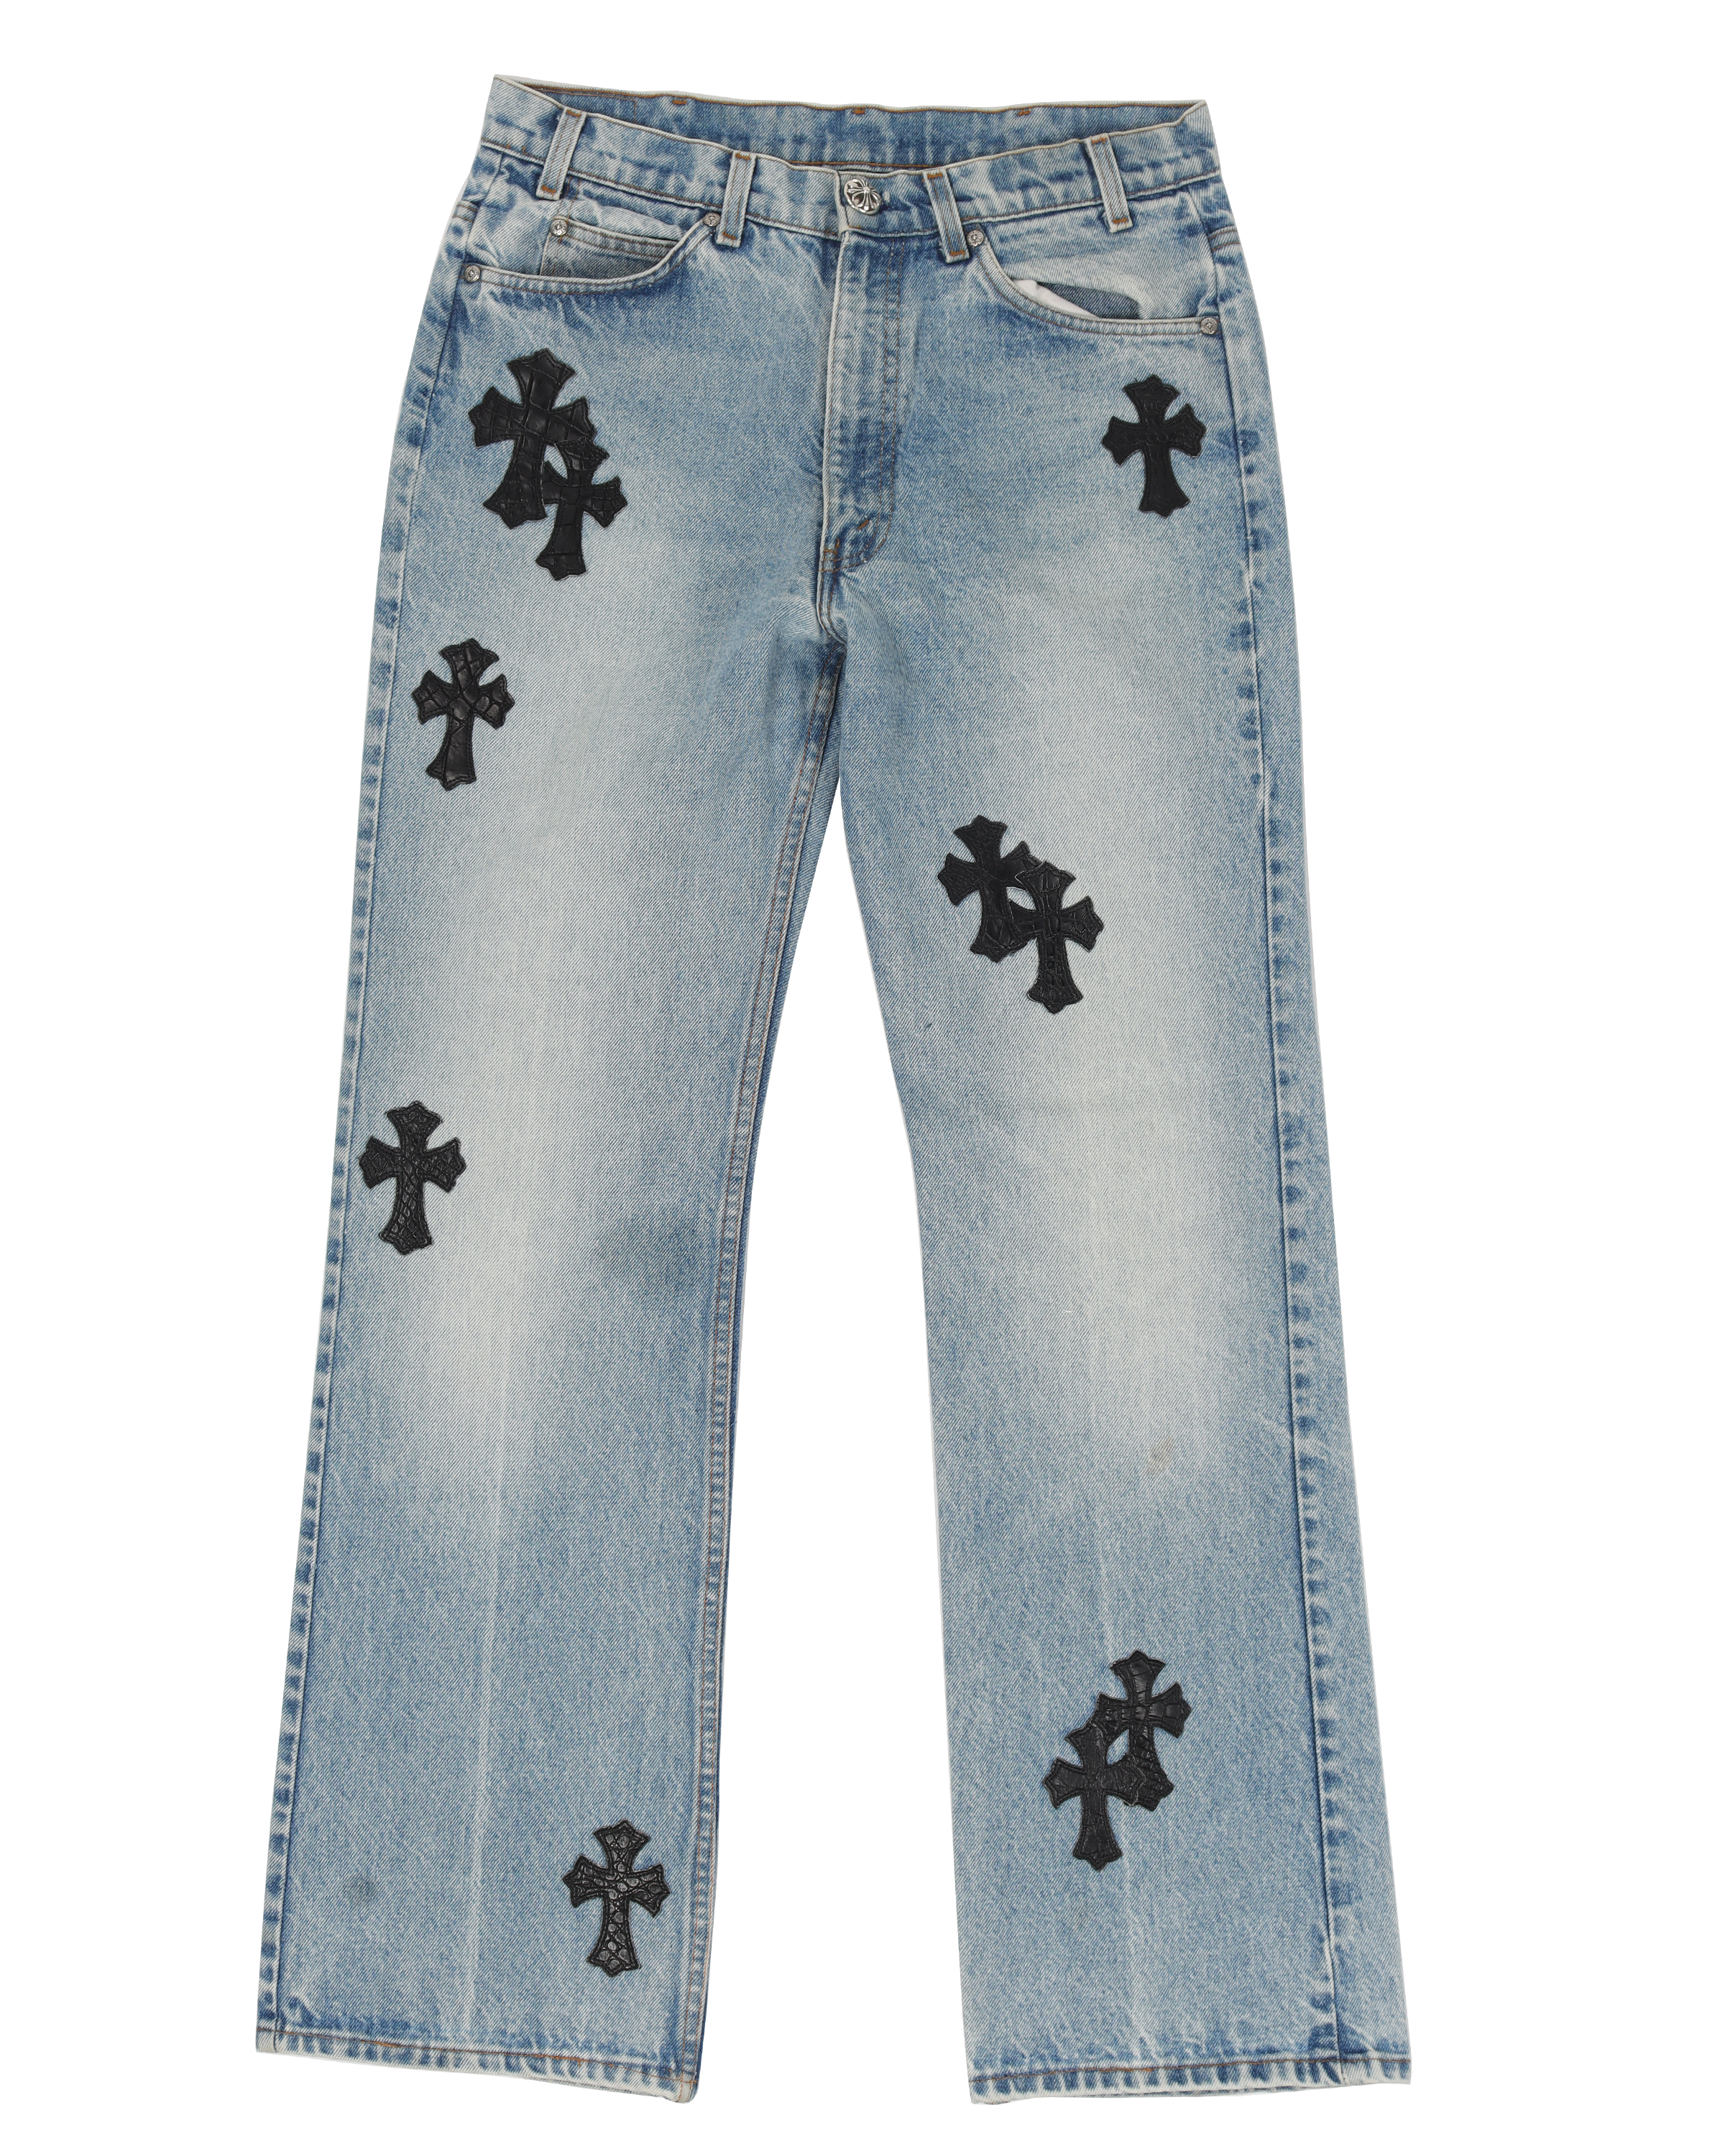 Chrome Hearts Black Cross-Patch Jeans